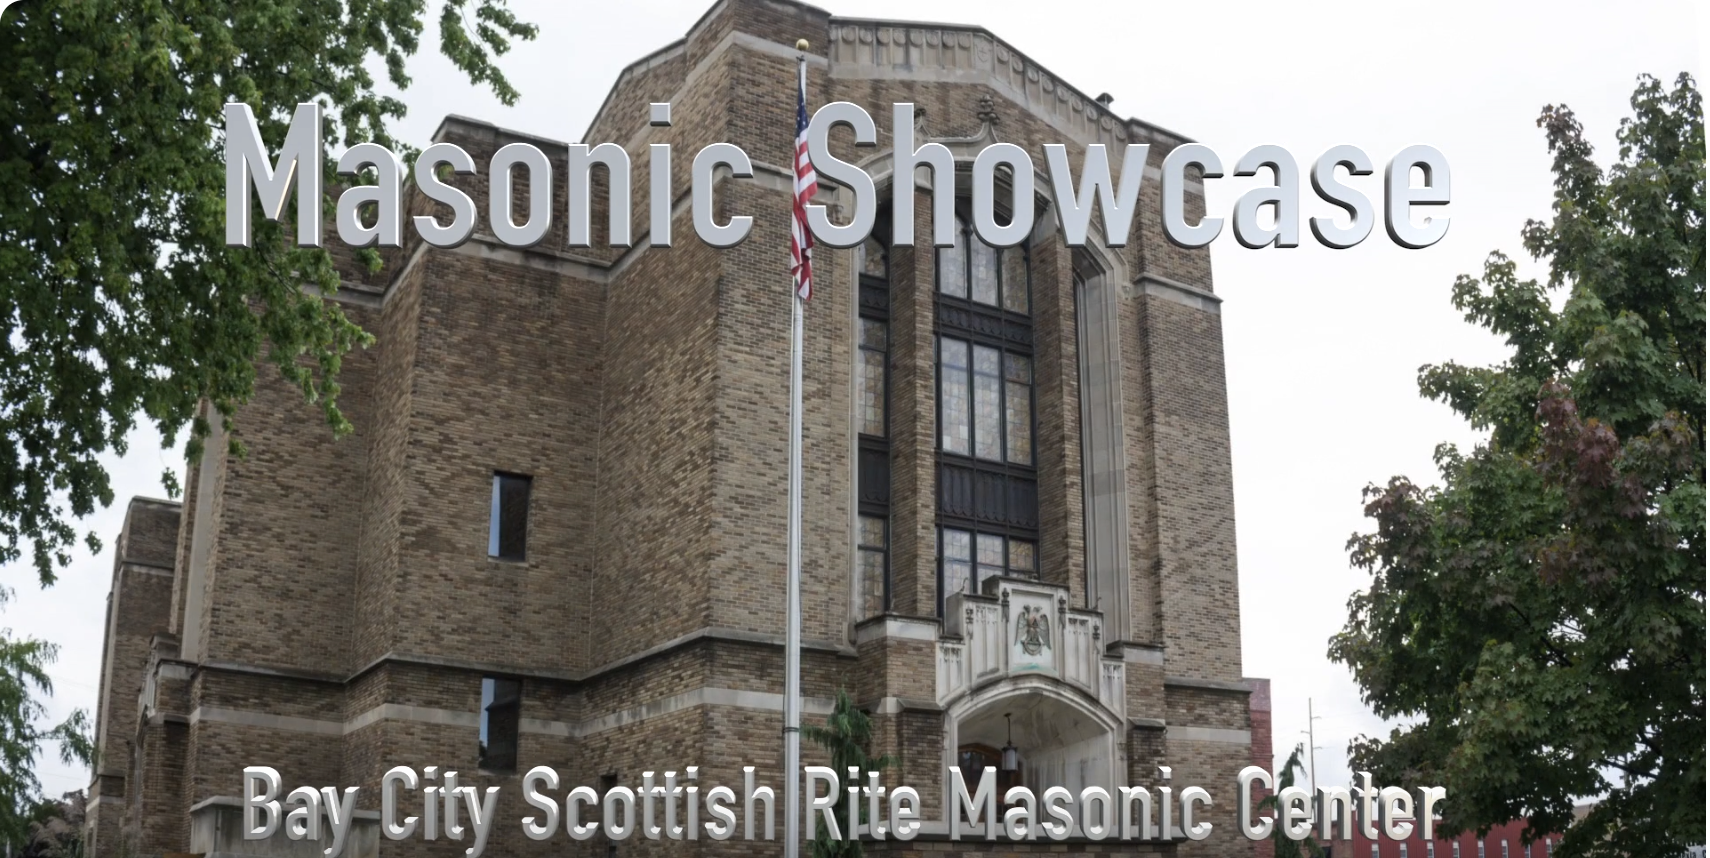 Masonic Showcase video